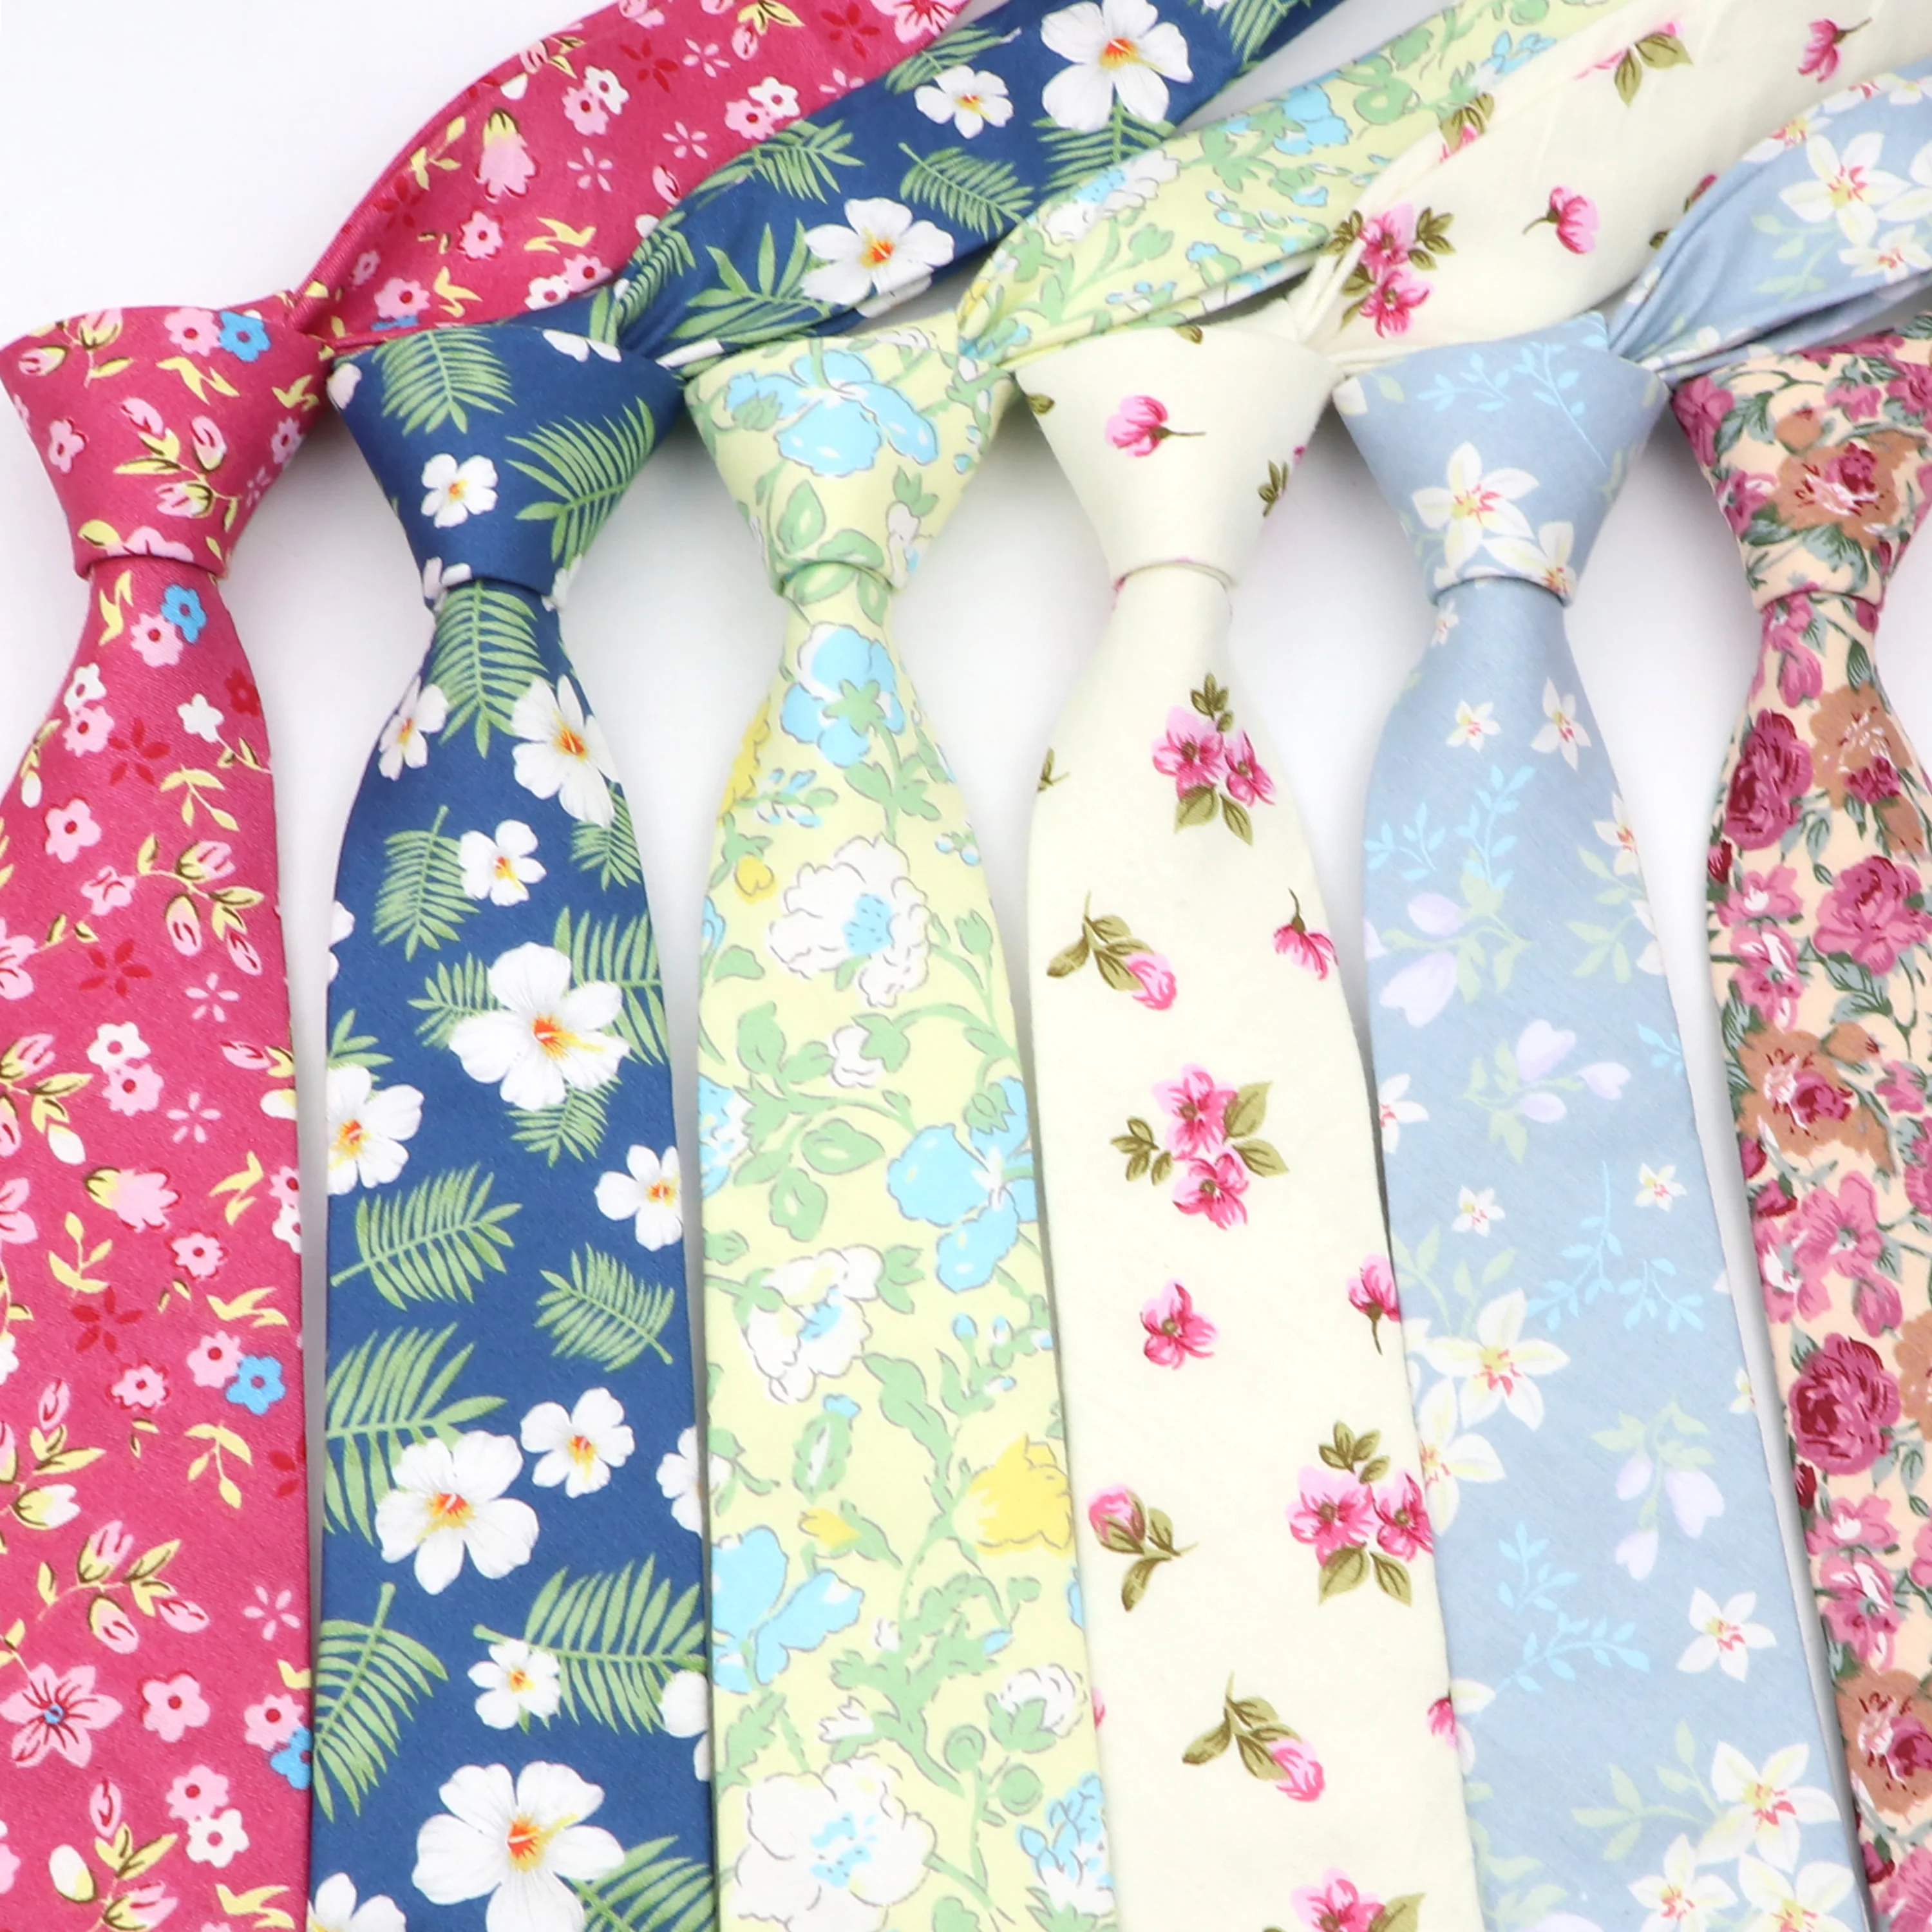 

Men's Classic Flower Ties Handmade Cotton Tie For 6CM Narrow Floral Pink Blue Neckties Gift Wedding Party Casual Gravatas Tie